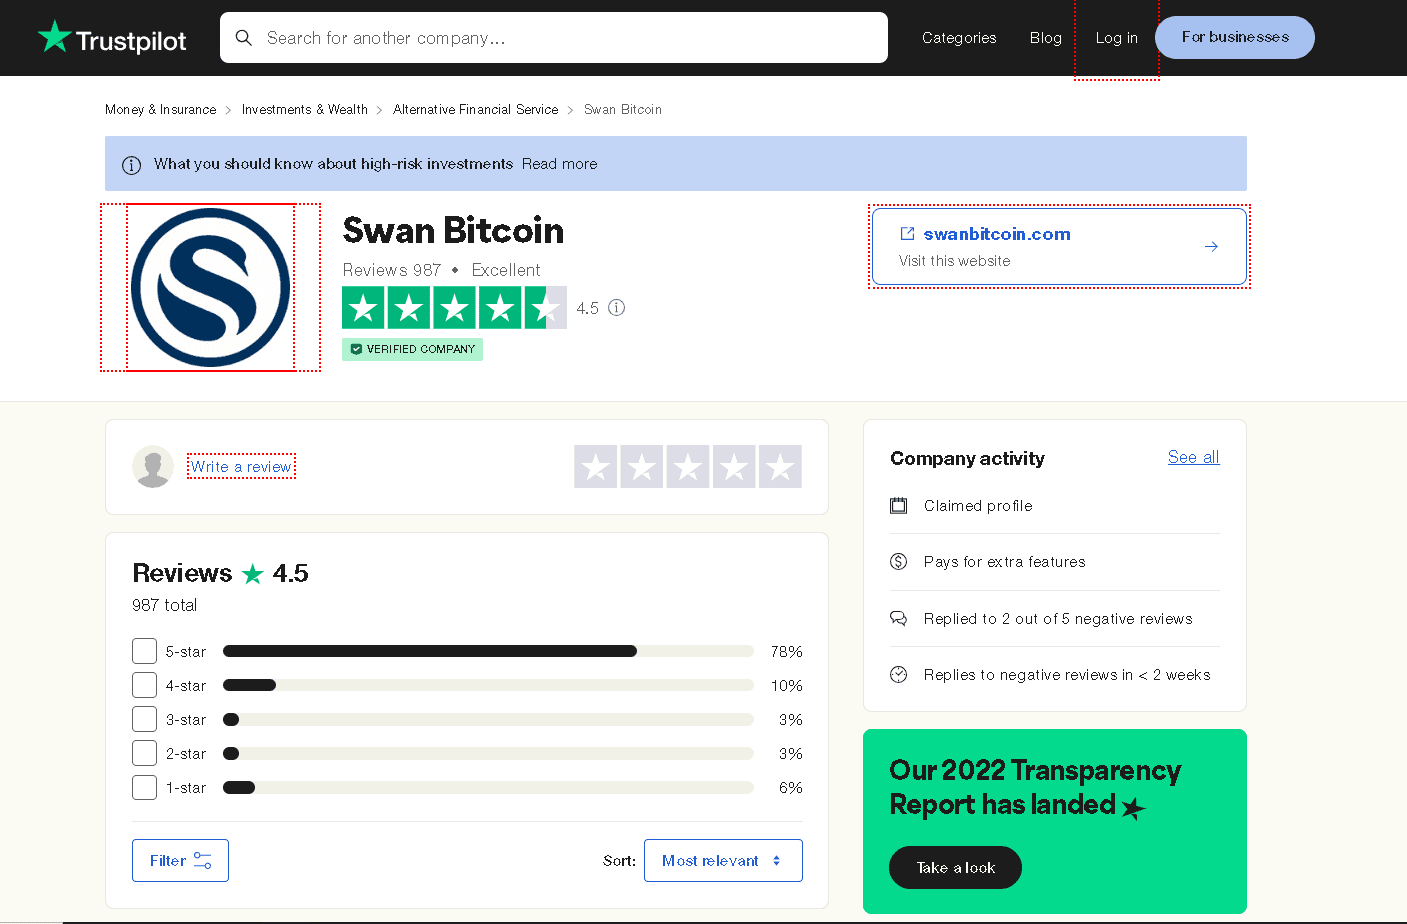 Swan Bitcoin Trustpilot profile and positive customer reviews